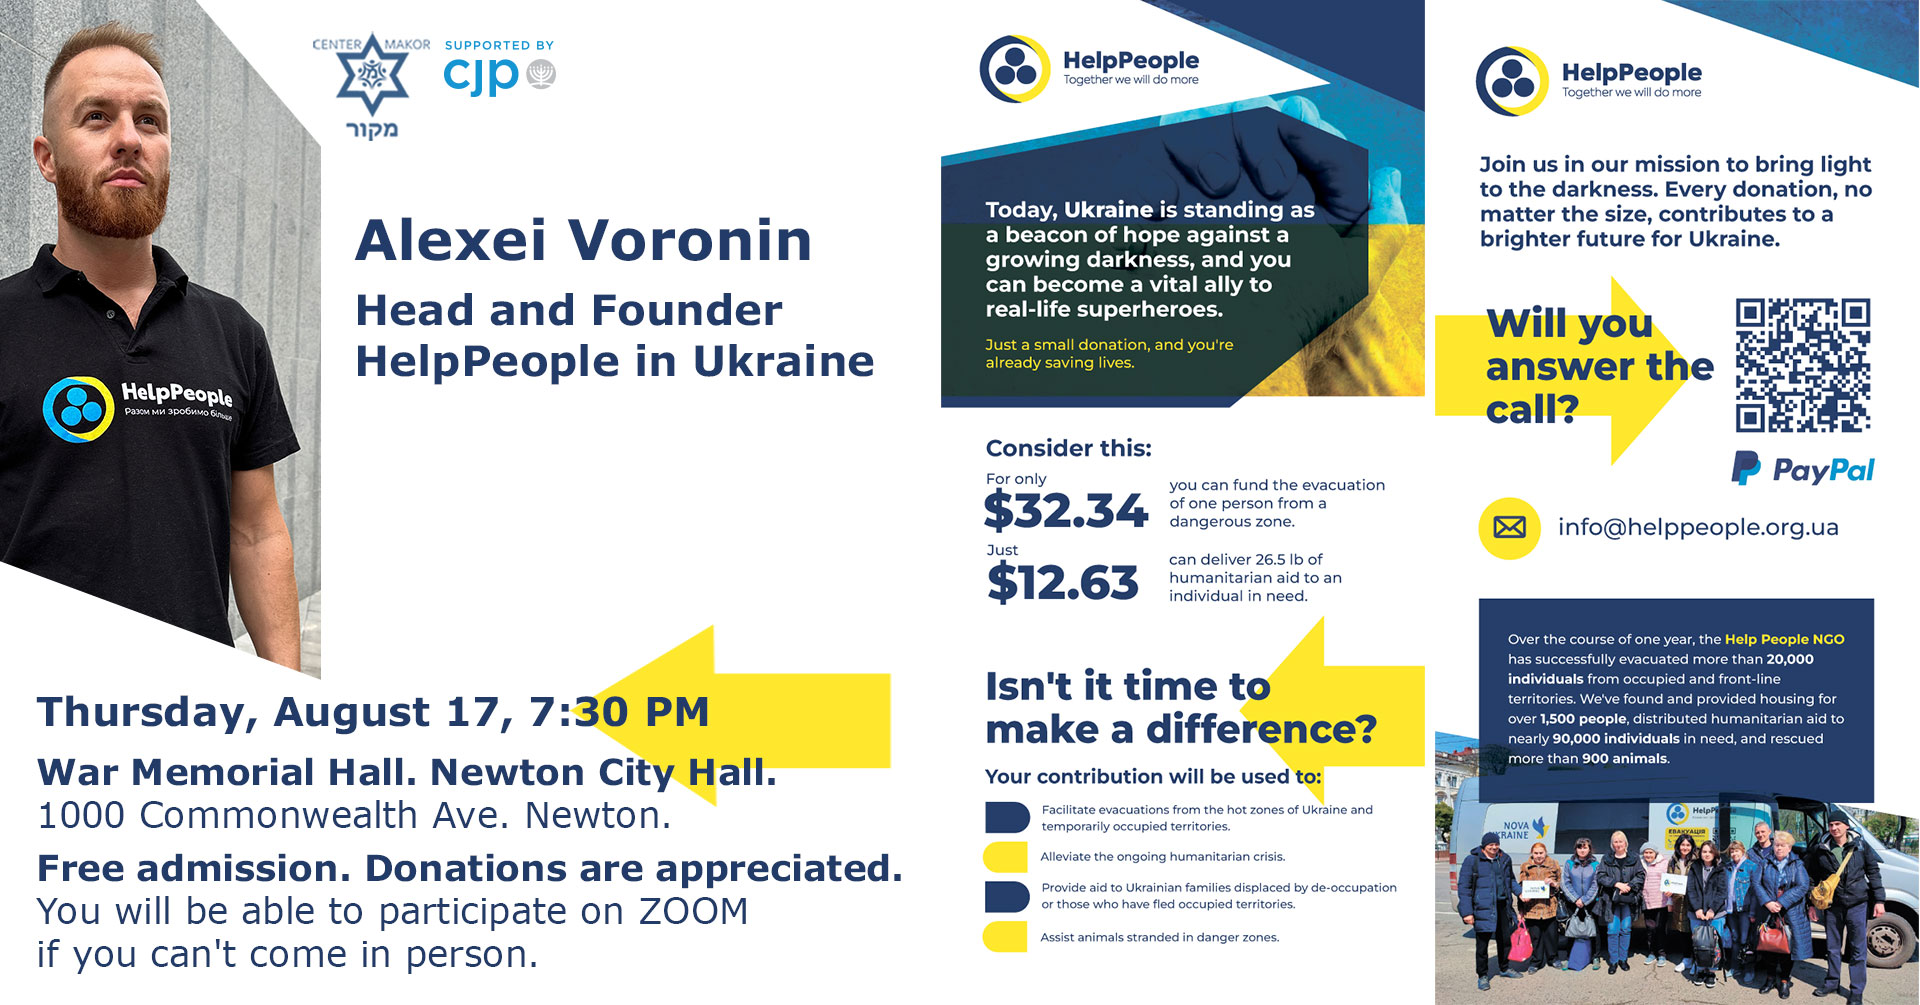 Meet Alexei Voronin, Head and Founder, HelpPeople in Ukraine